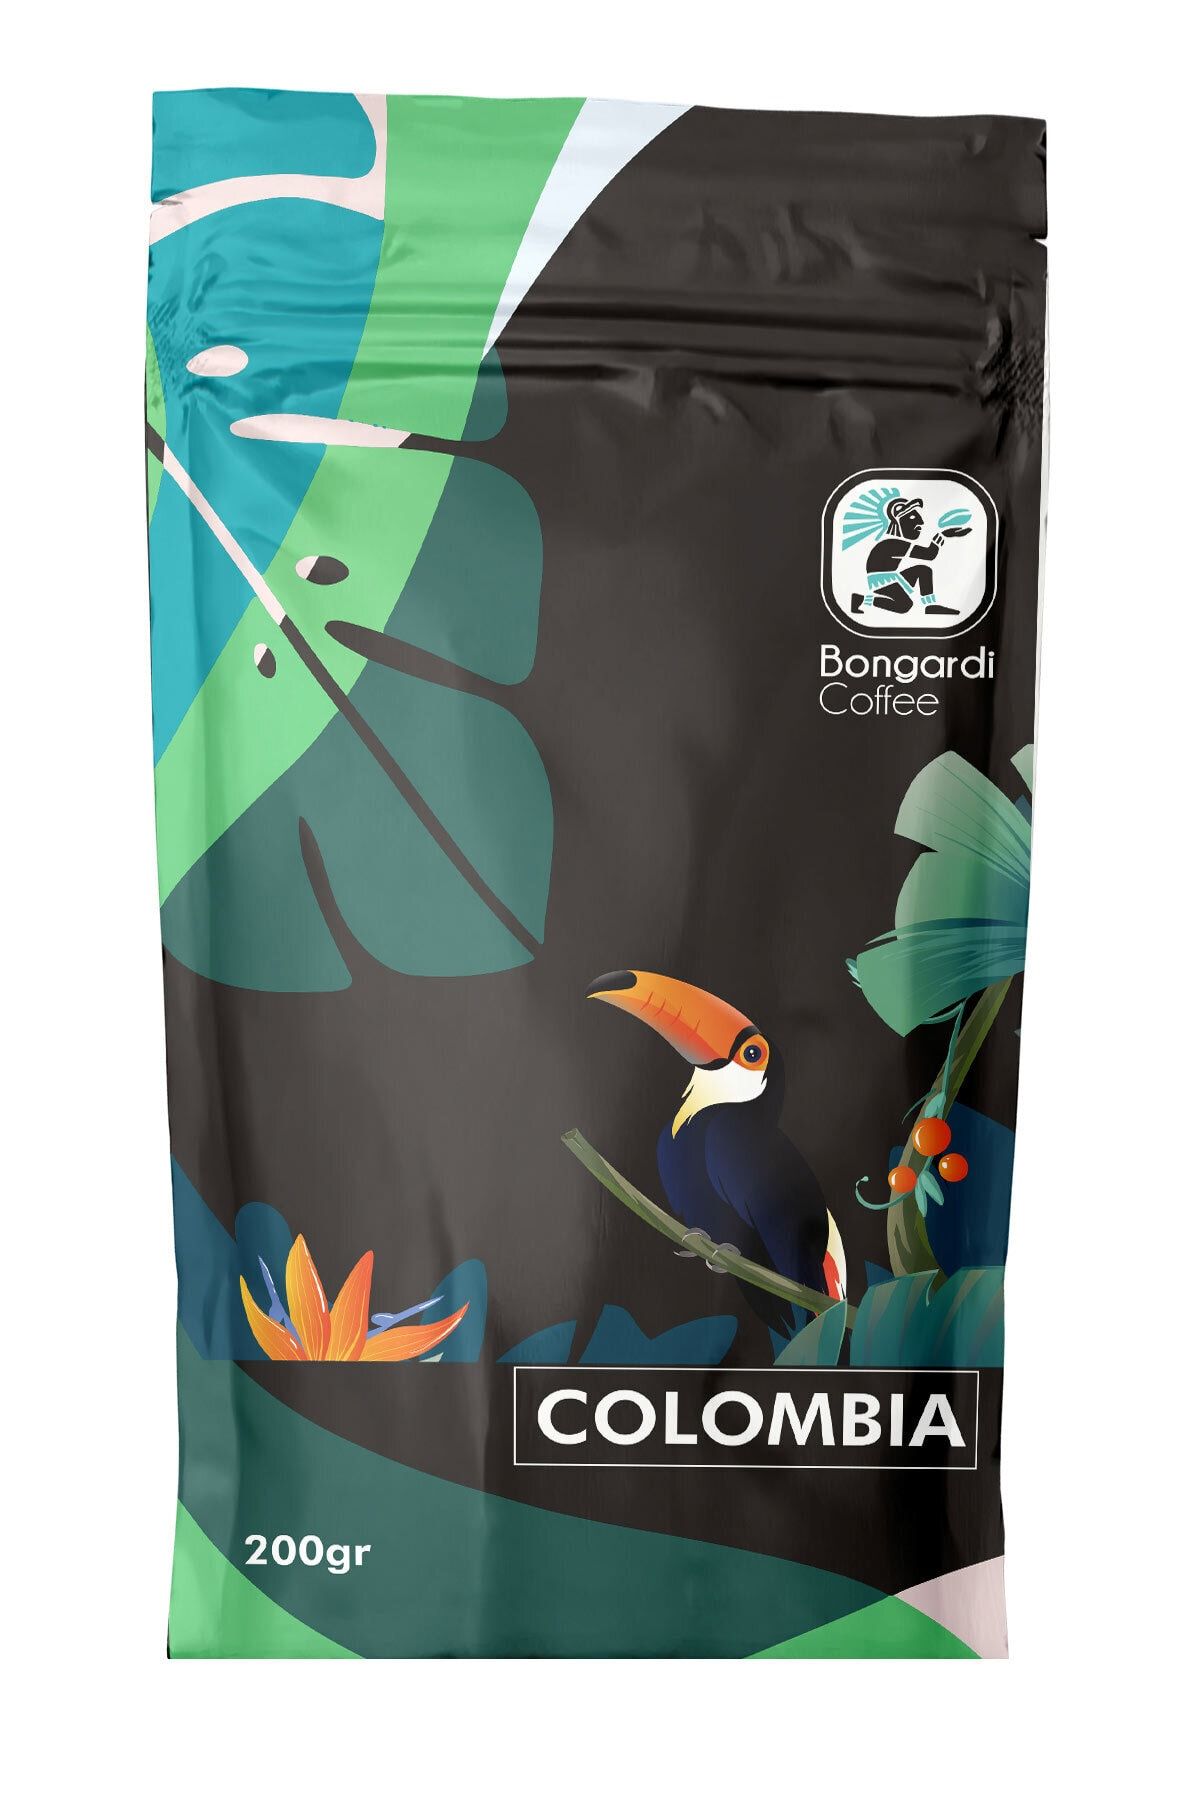 Bongardi Coffee 200 Gram Colombia Yöresel Filtre Kahve Makinesi Uyumlu